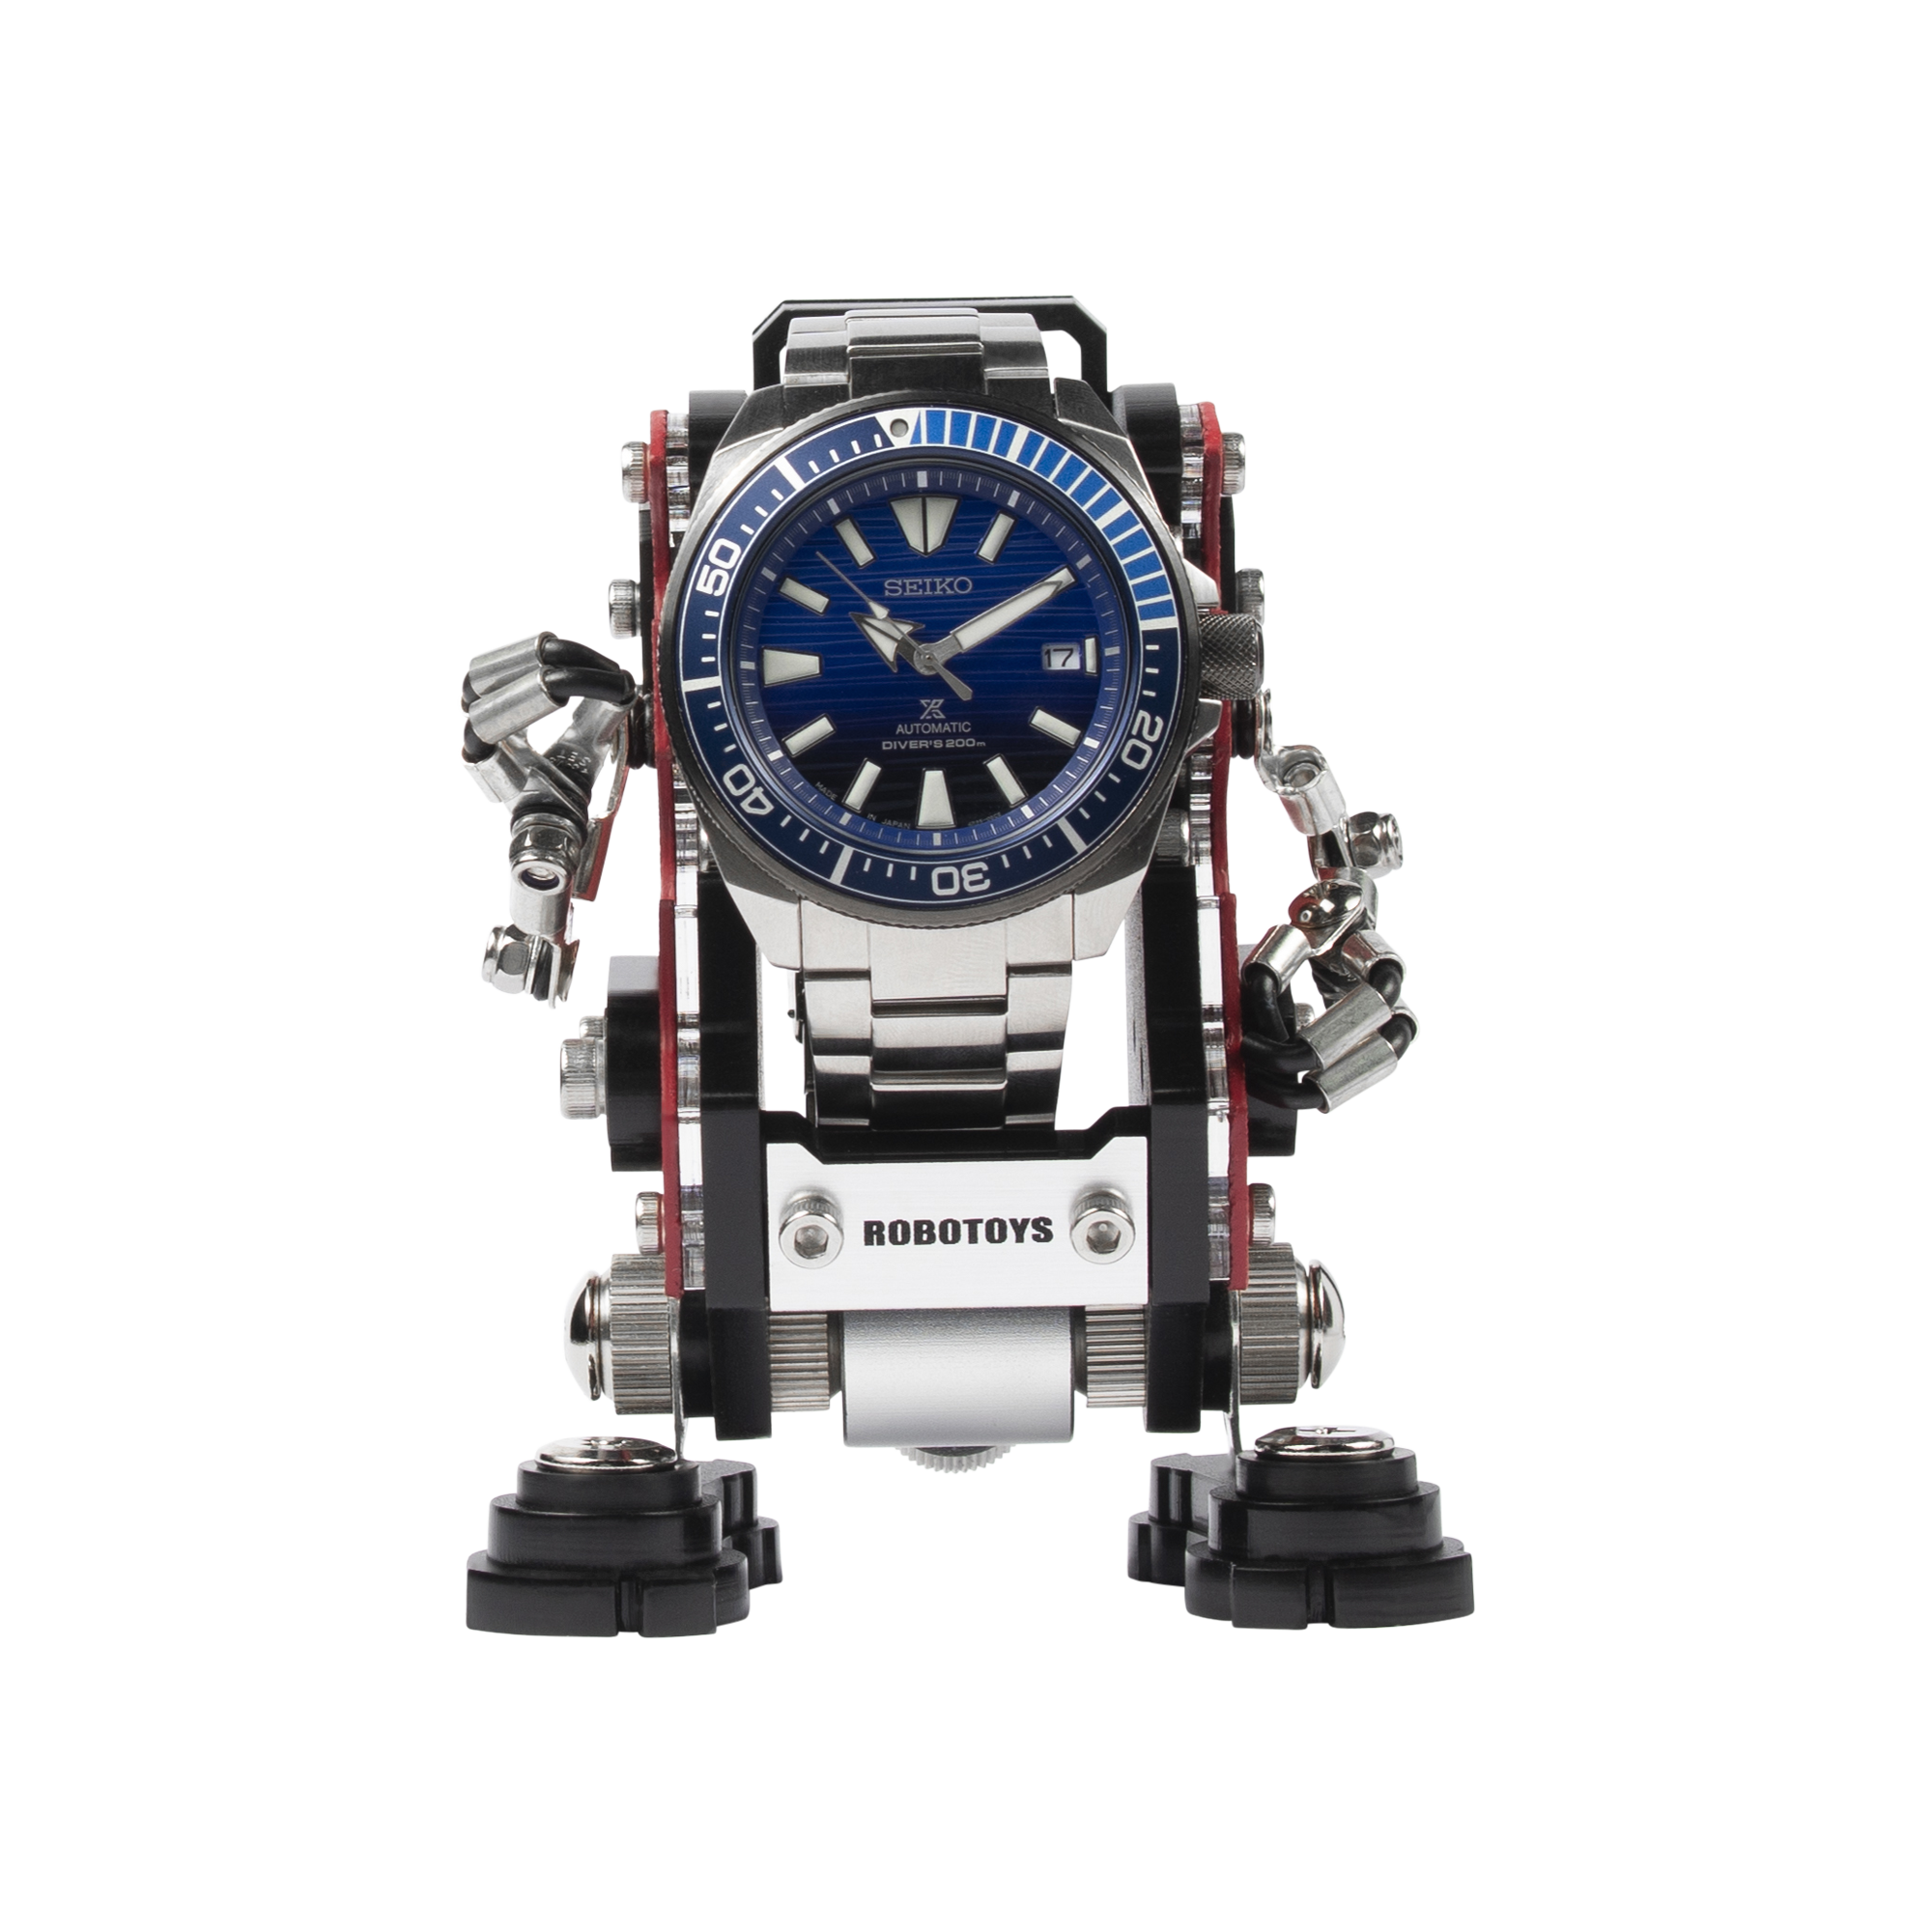 [RoboToys] Watch Stand - NanoBot - Saffiano Red